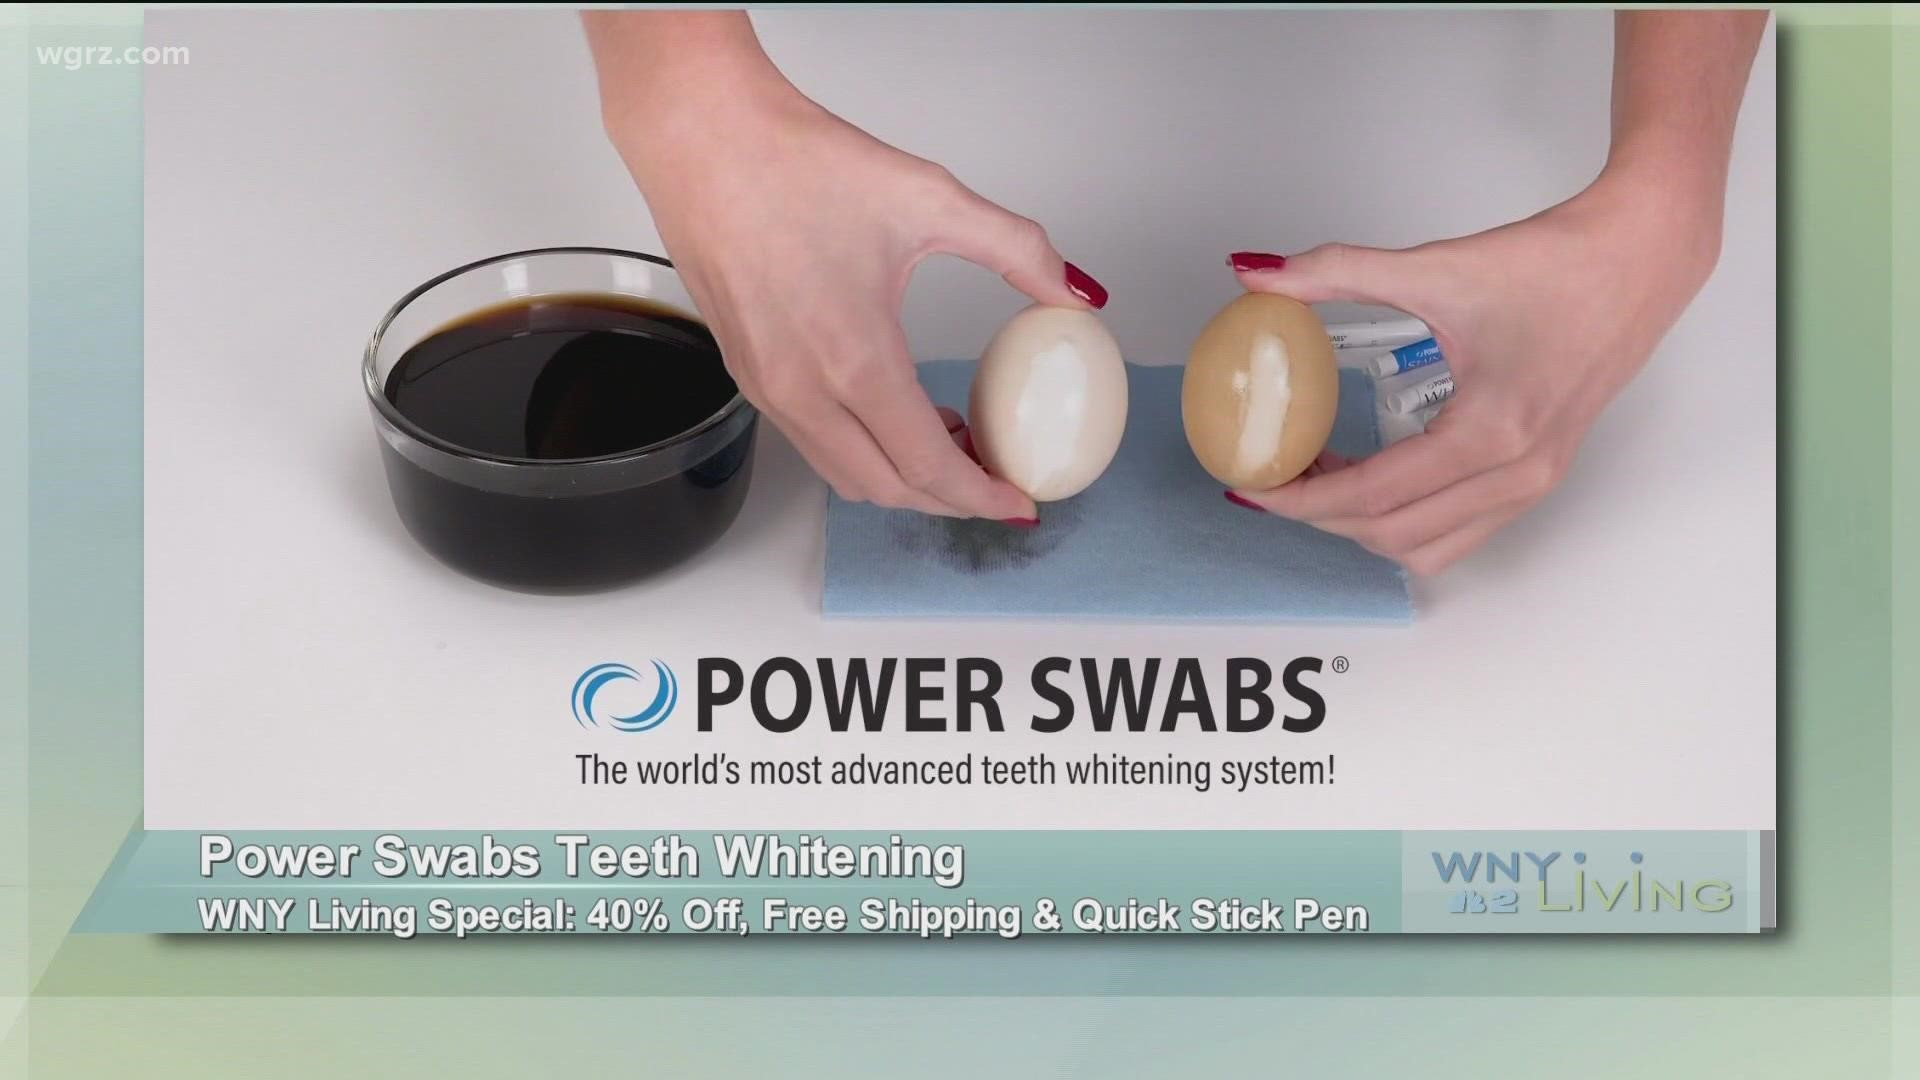 WNY Living - September 18 - Power Swabs Teeth Whitening (THIS VIDEO IS SPONSORED BY POWER SWABS TEETH WHITENING)